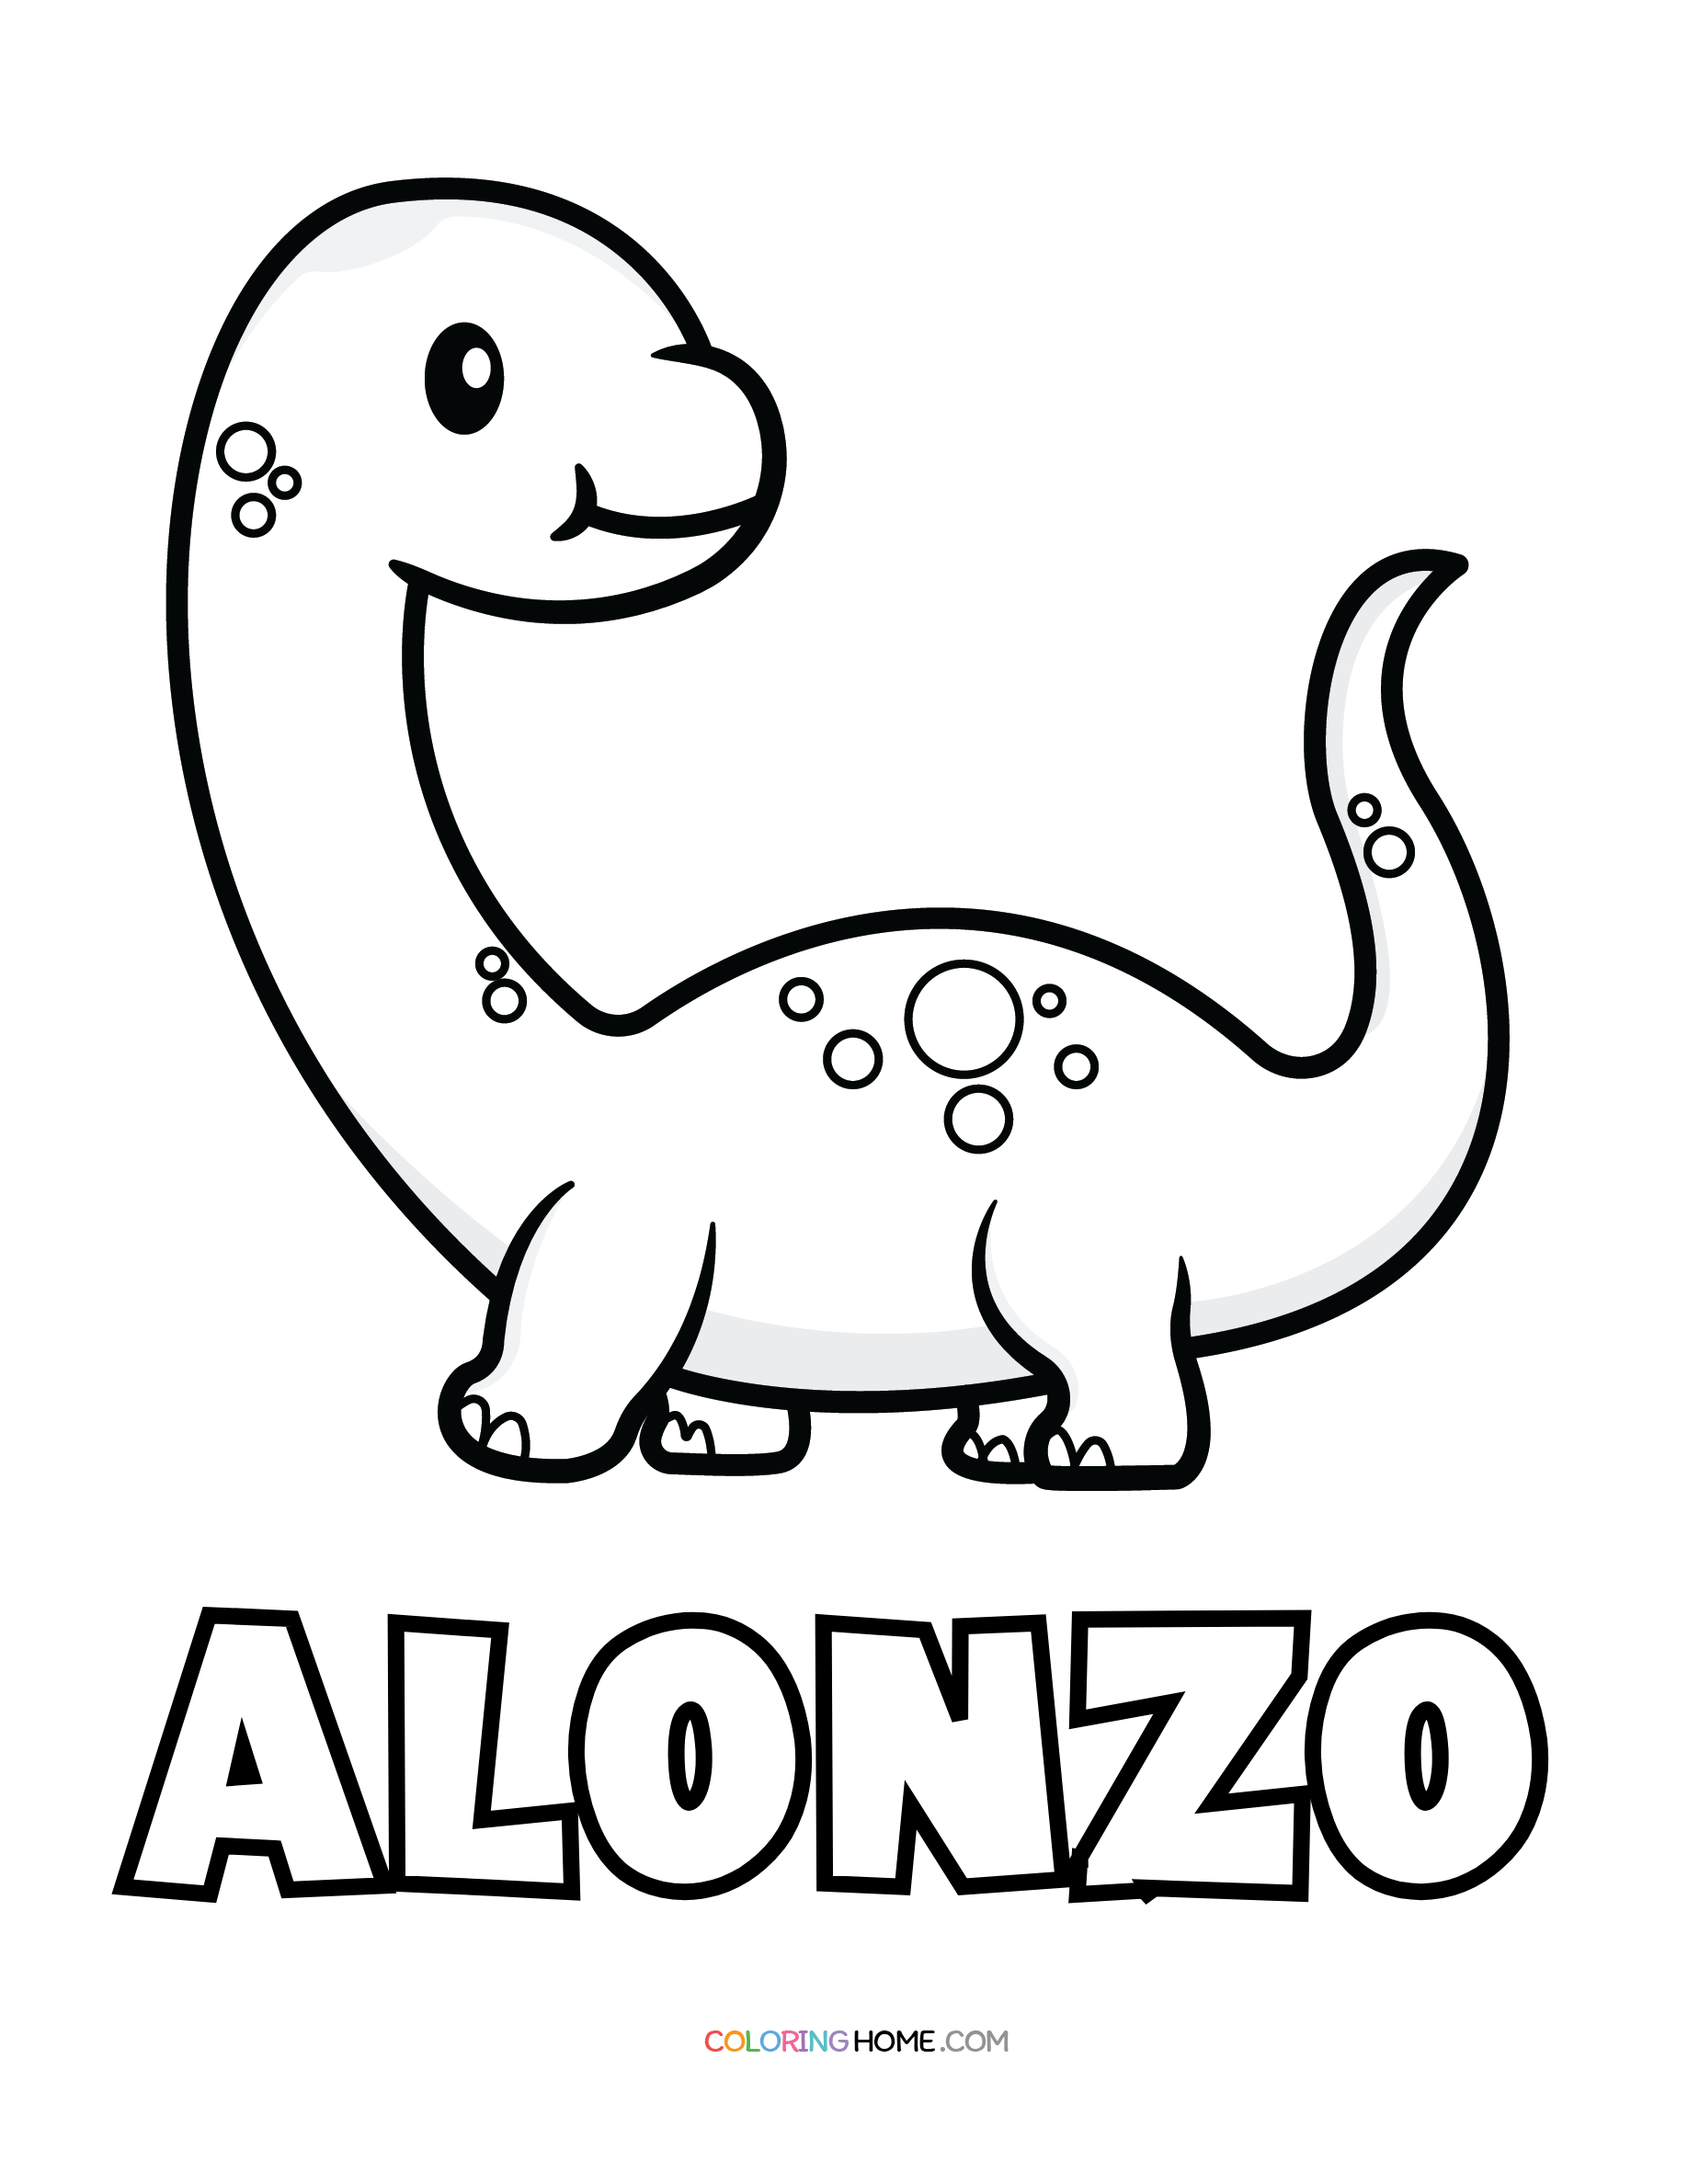 Alonzo dinosaur coloring page